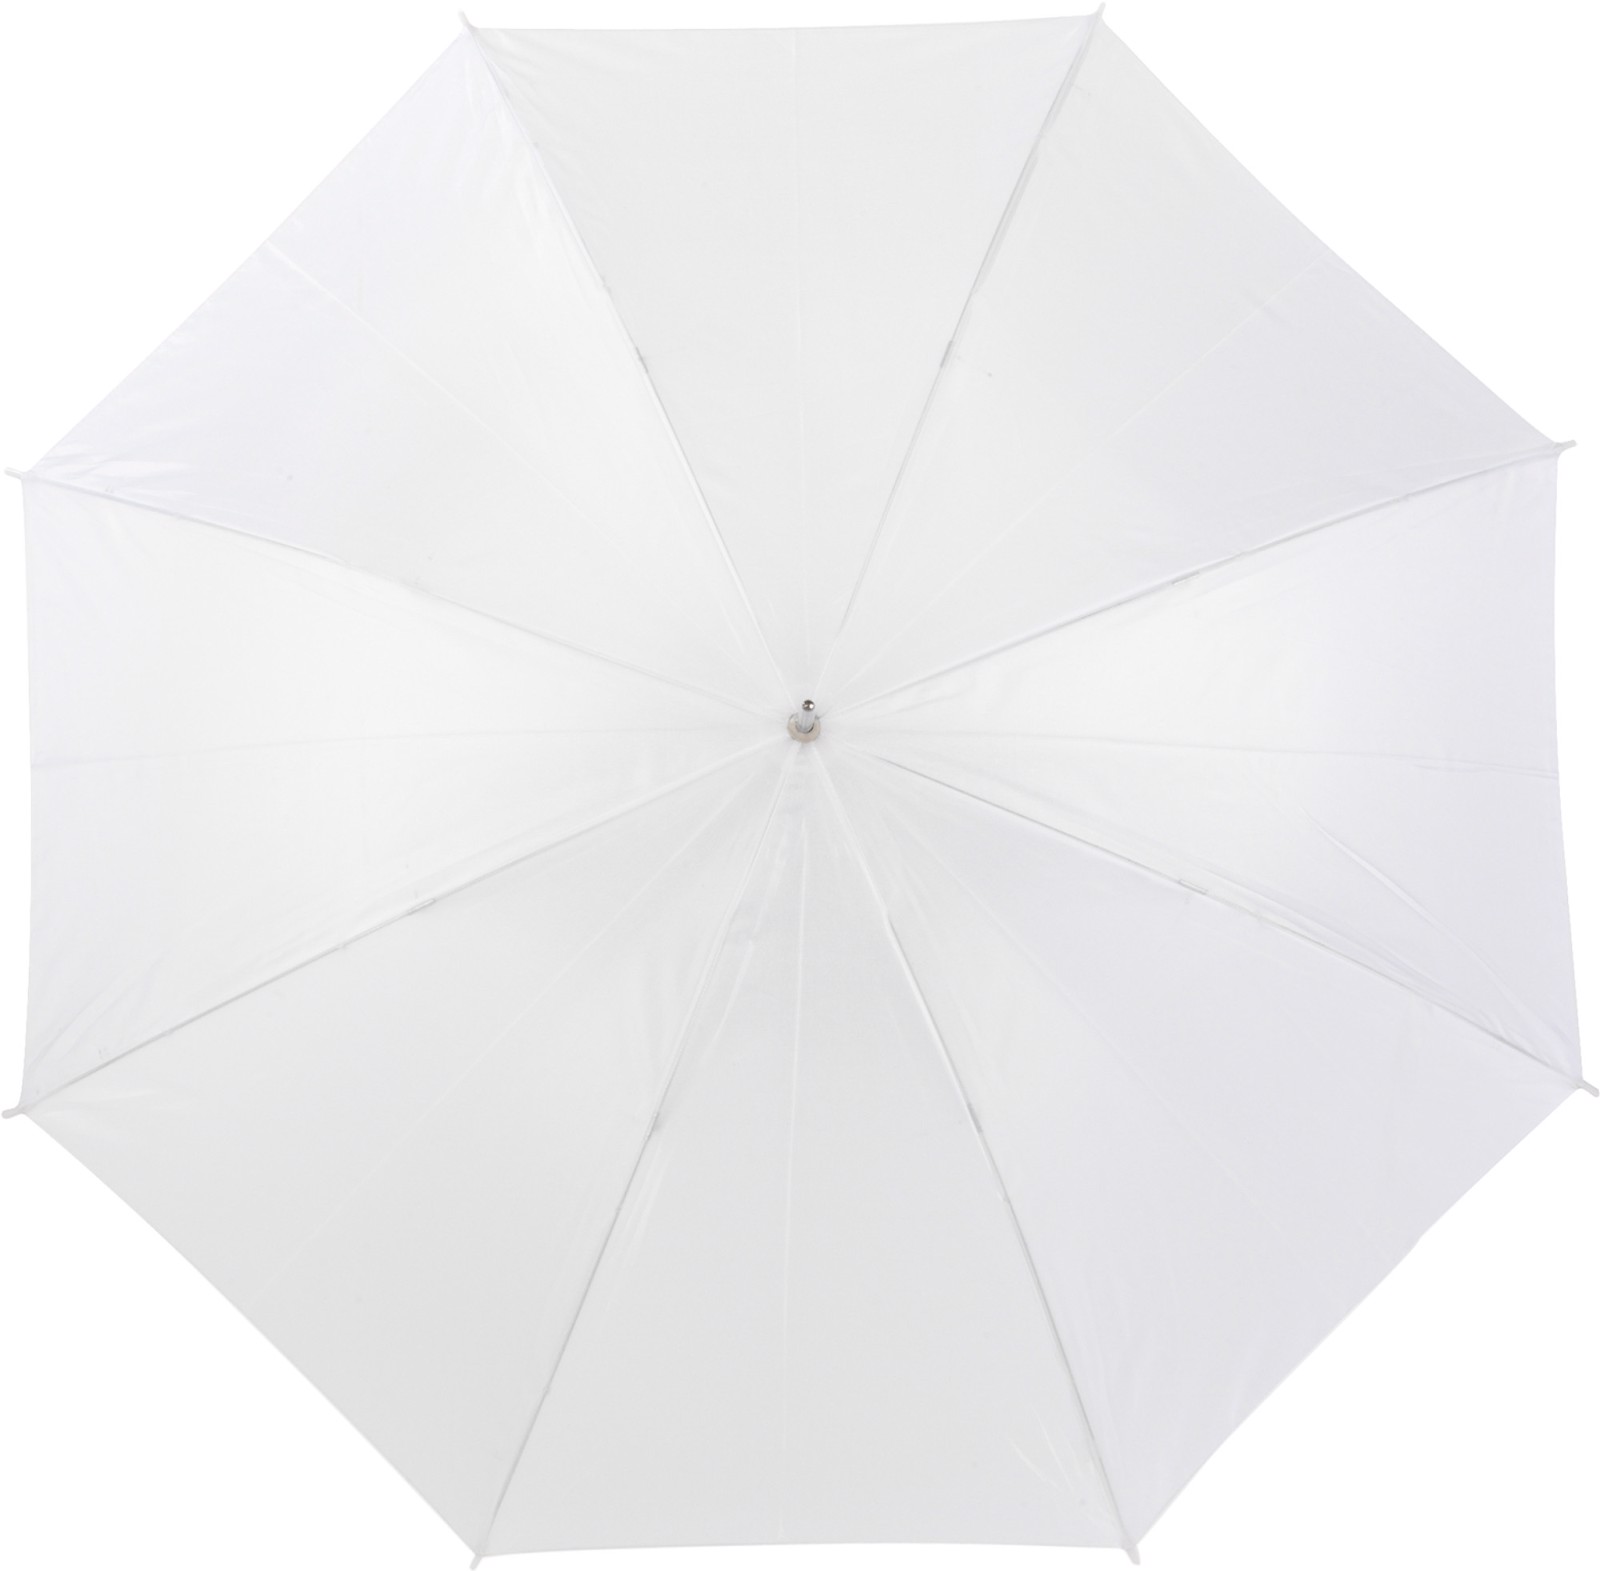 Polyester (170T) umbrella - White